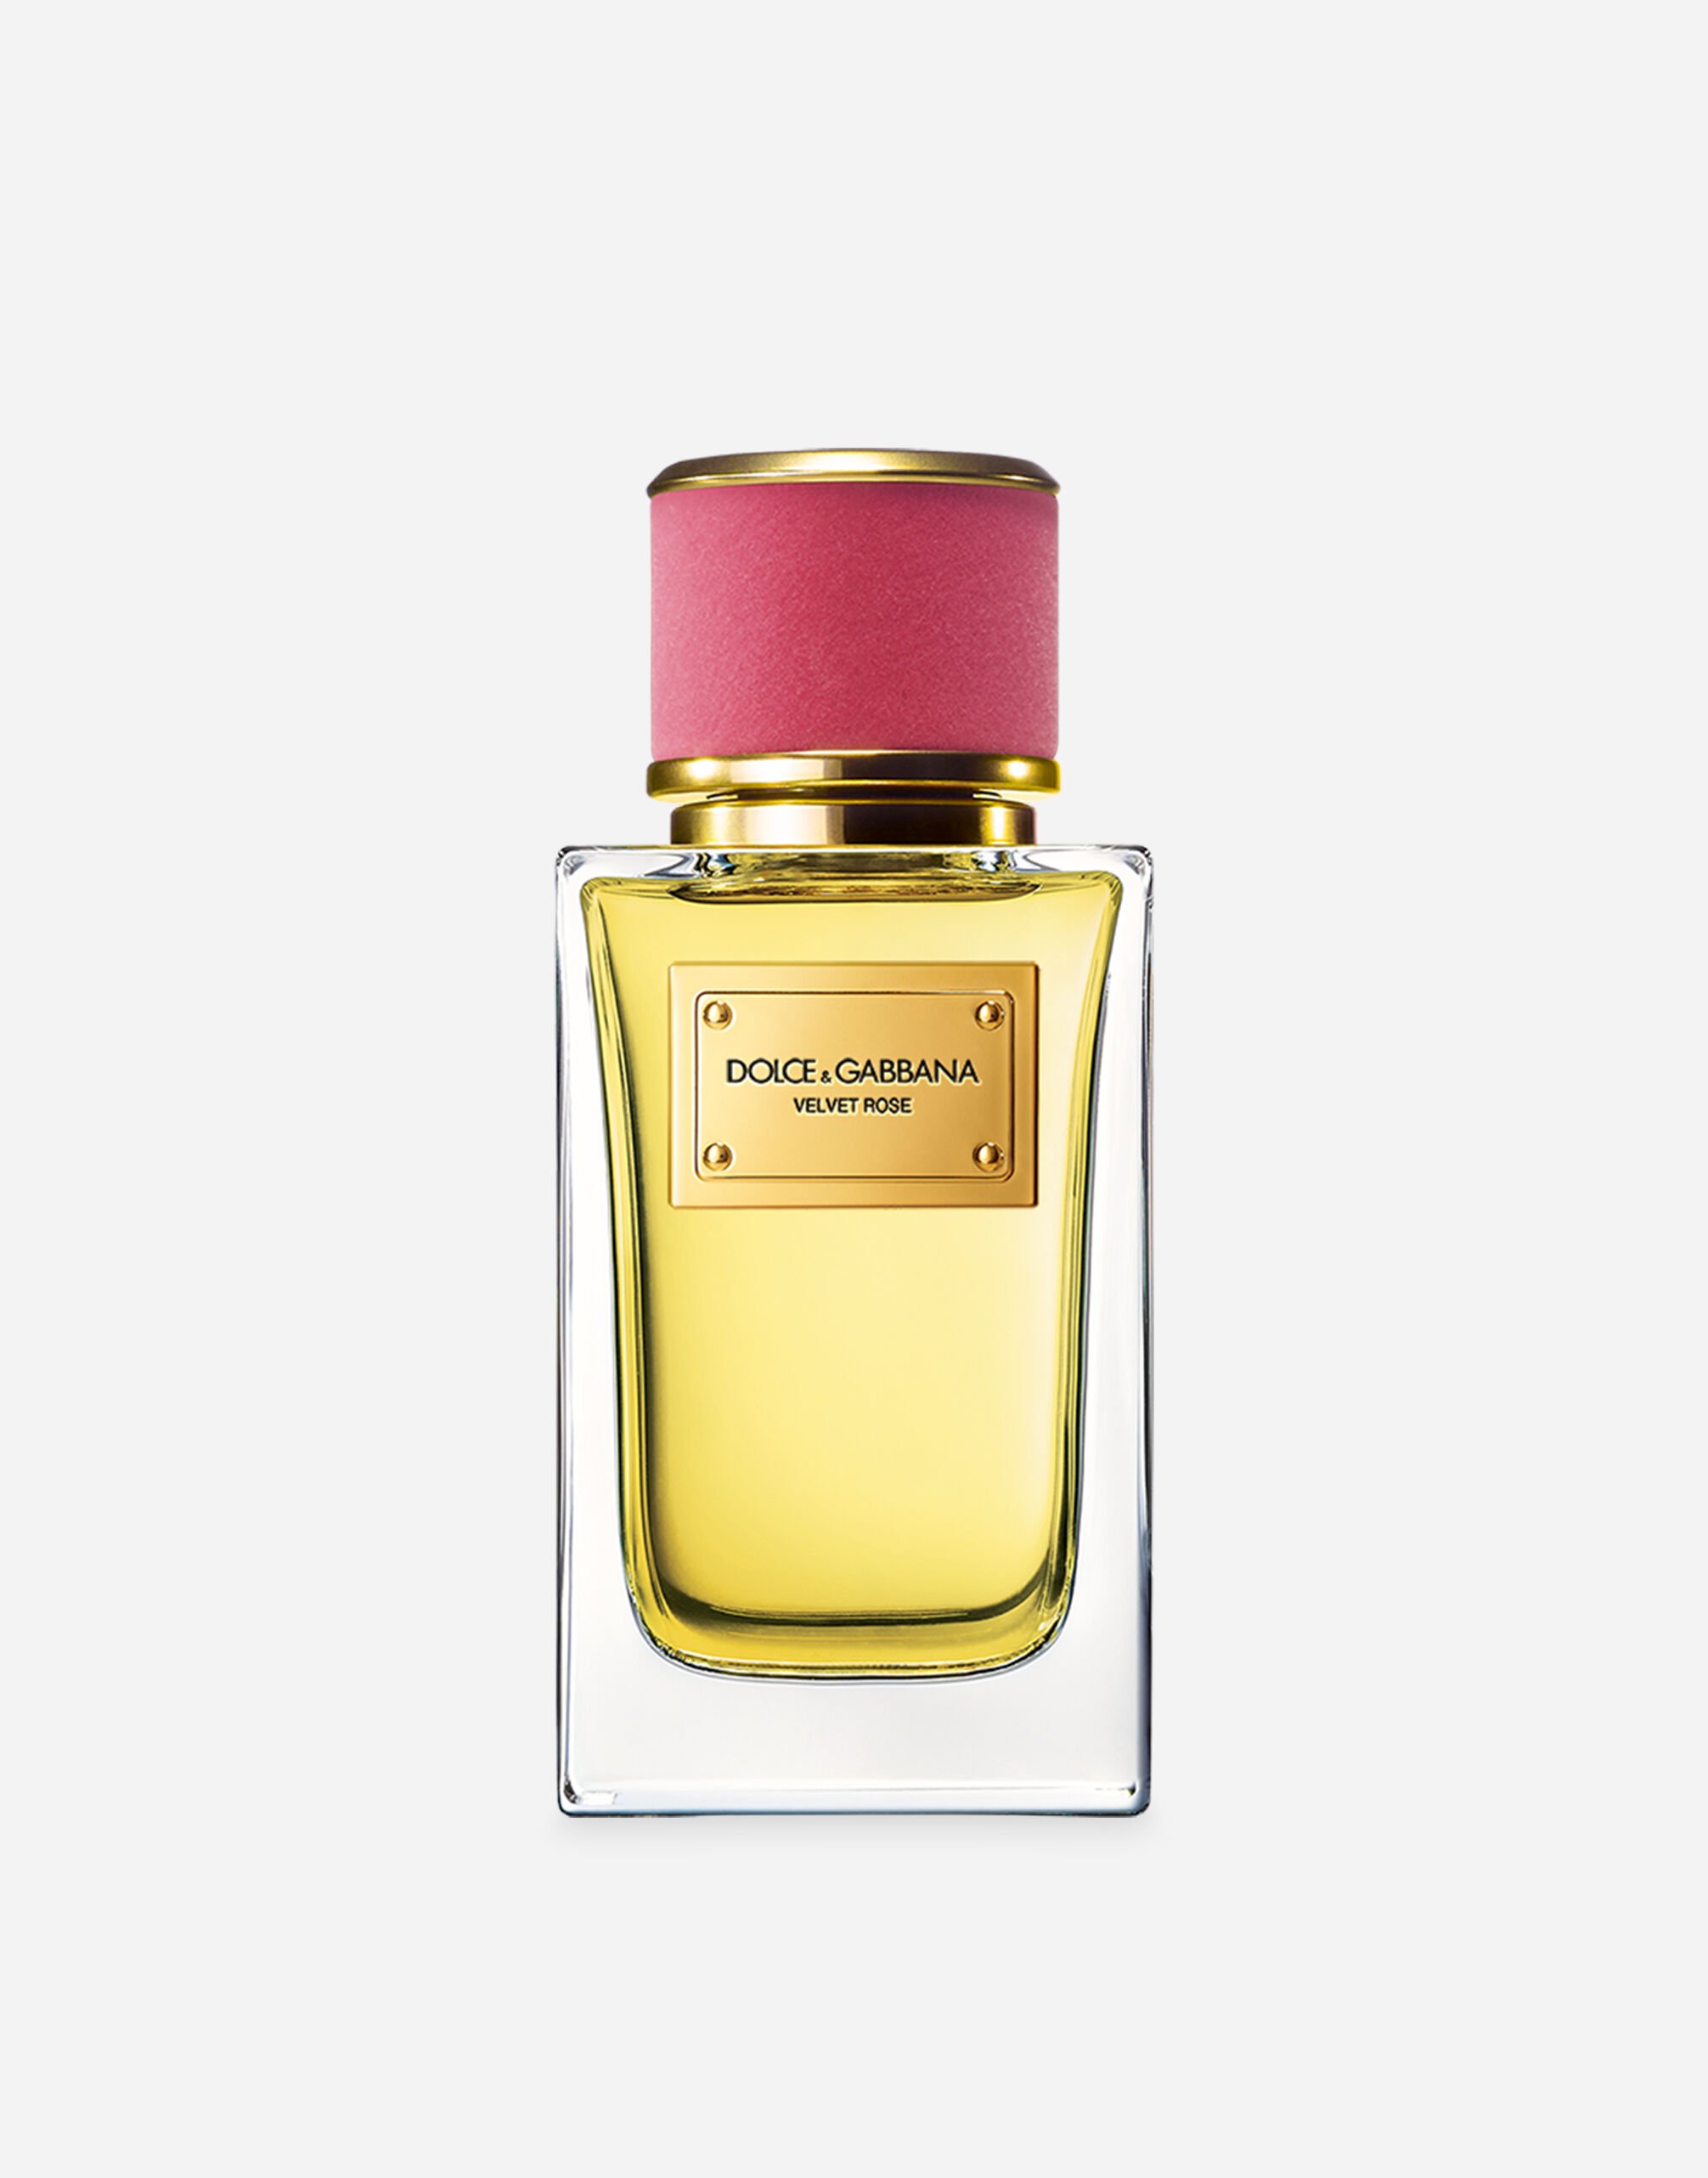 Dolce & Gabbana Velvet Rose Eau de Parfum - VP001UVP000